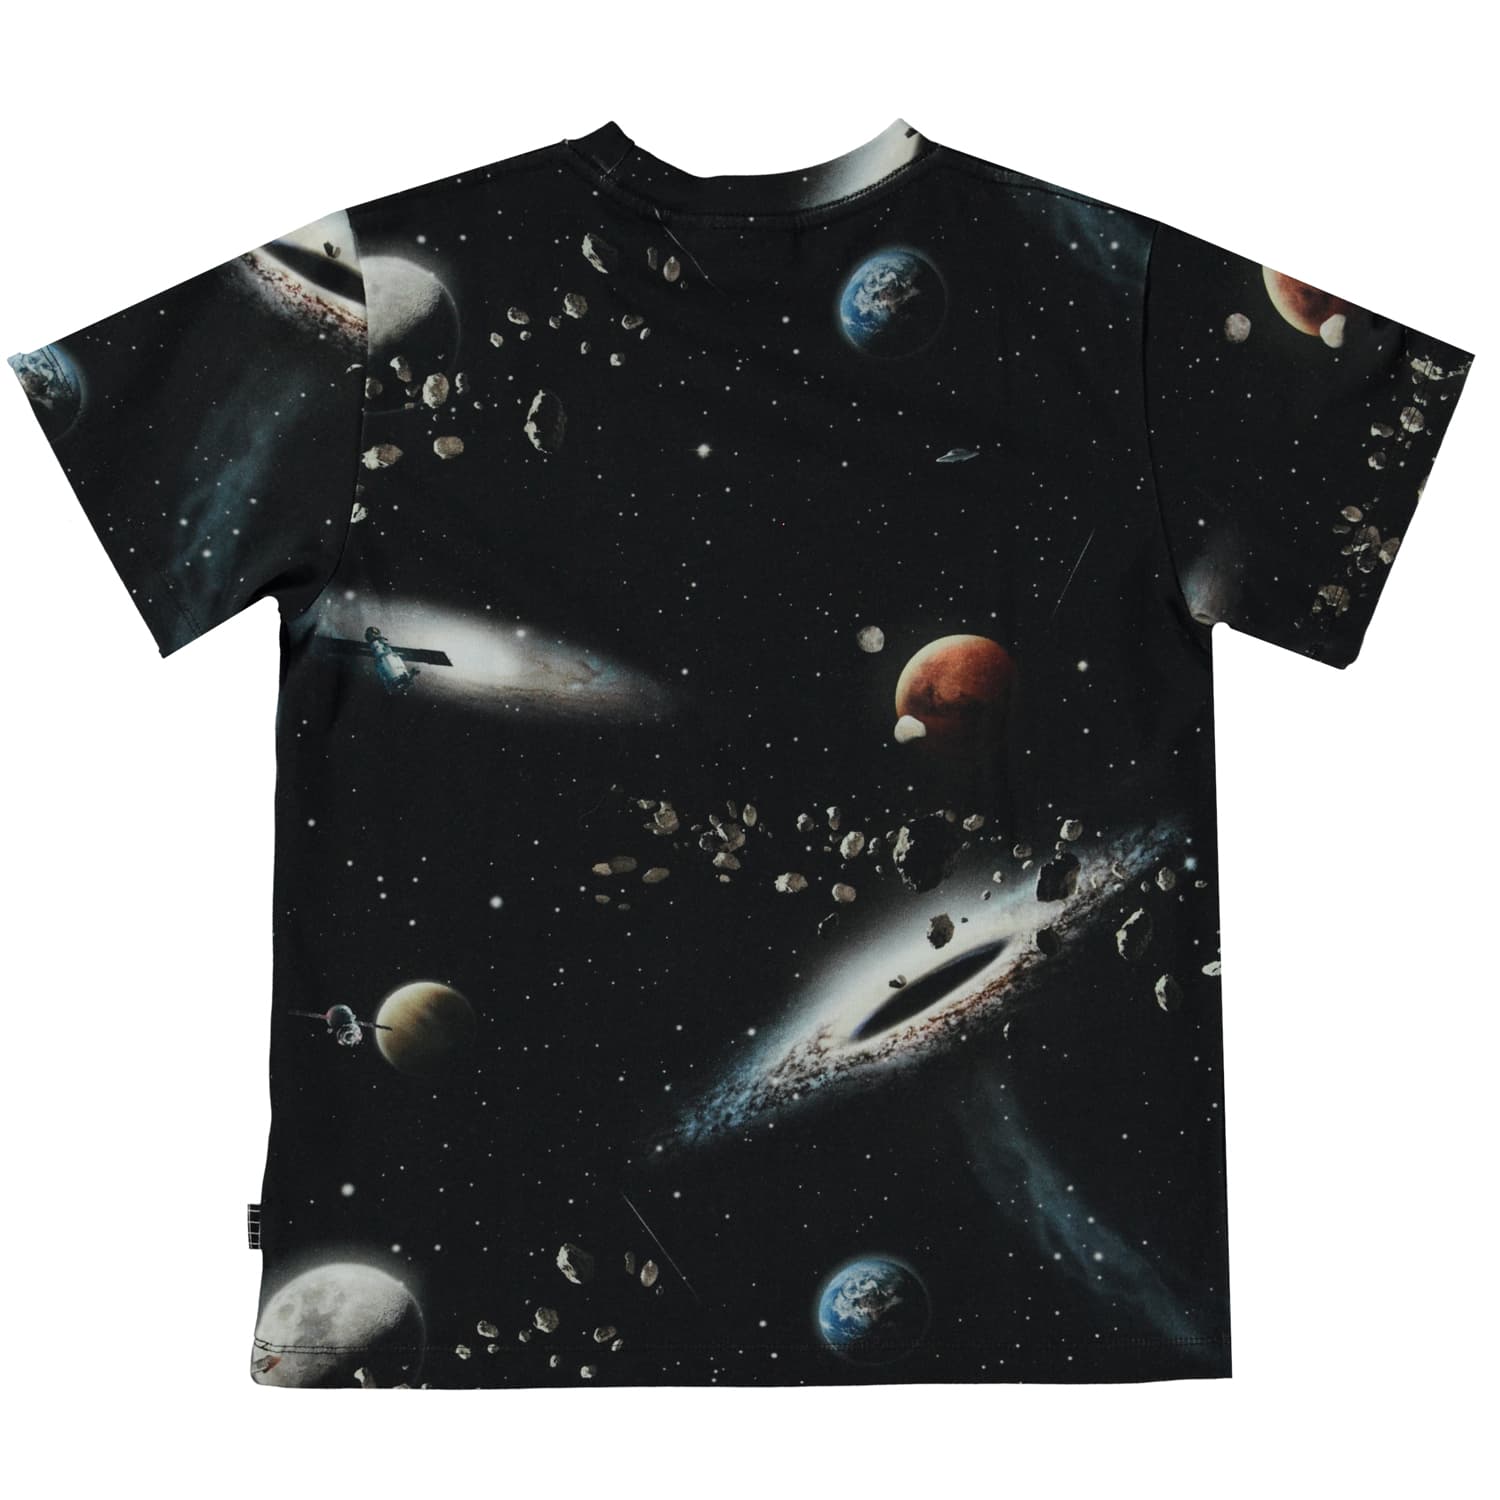 Riley T-shirt (Make Space)